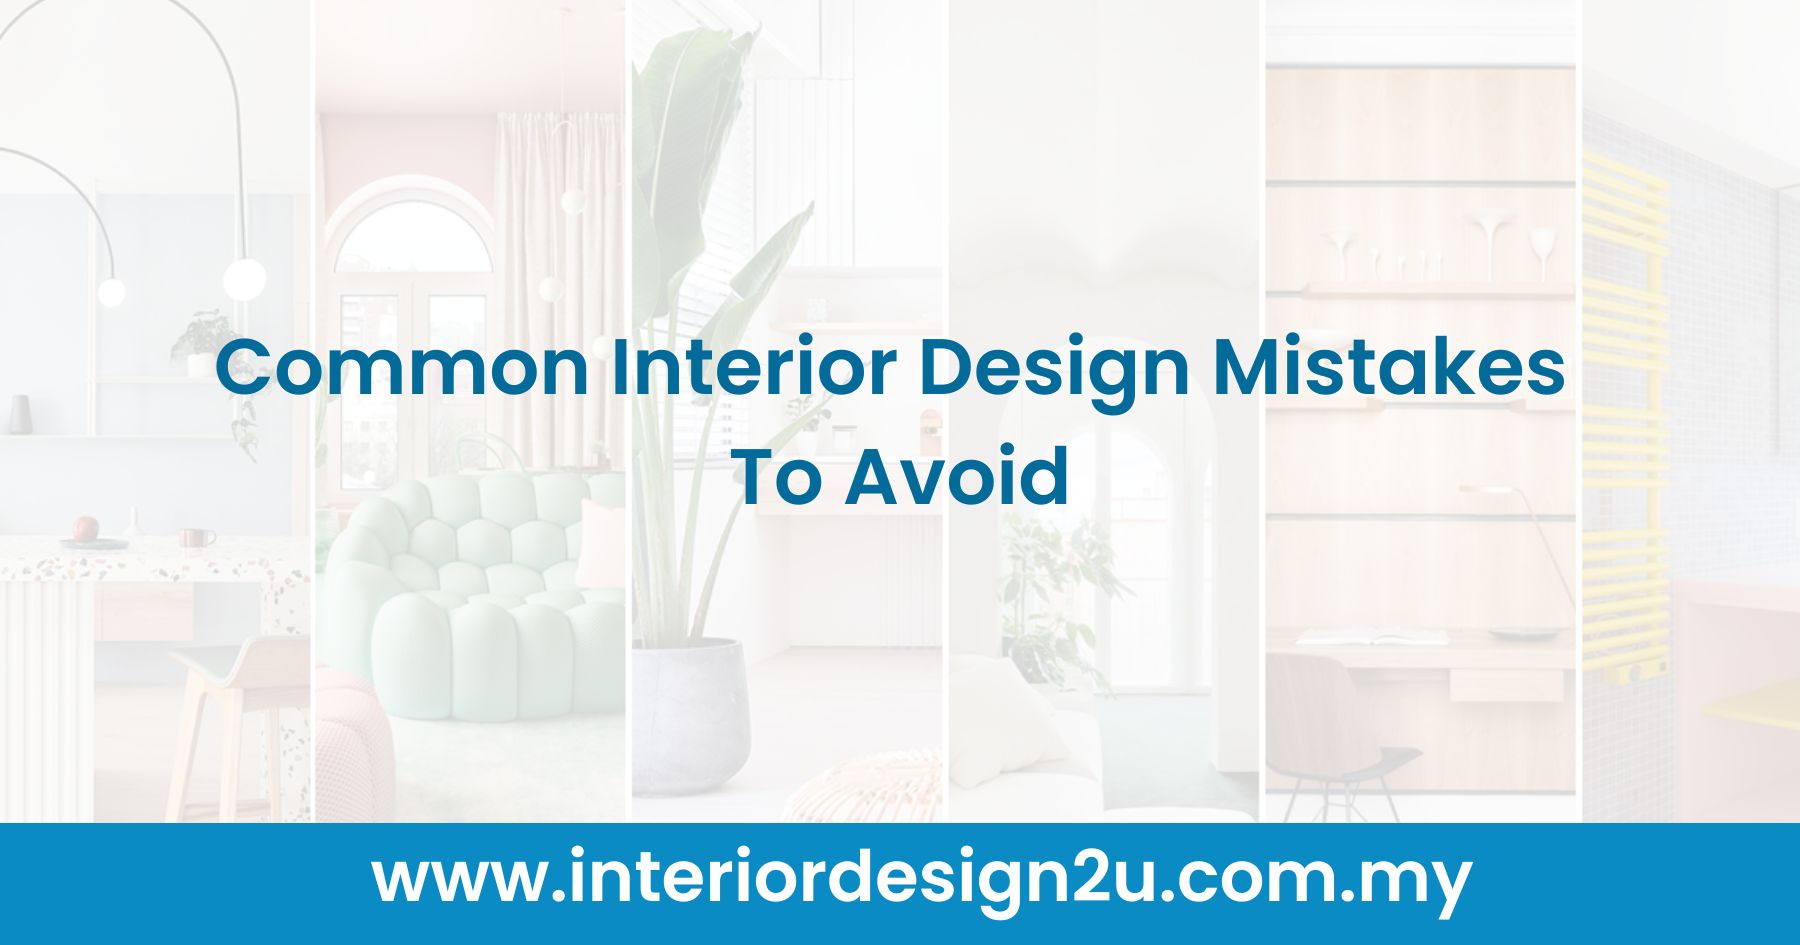 Common Interior Design Mistakes To Avoid